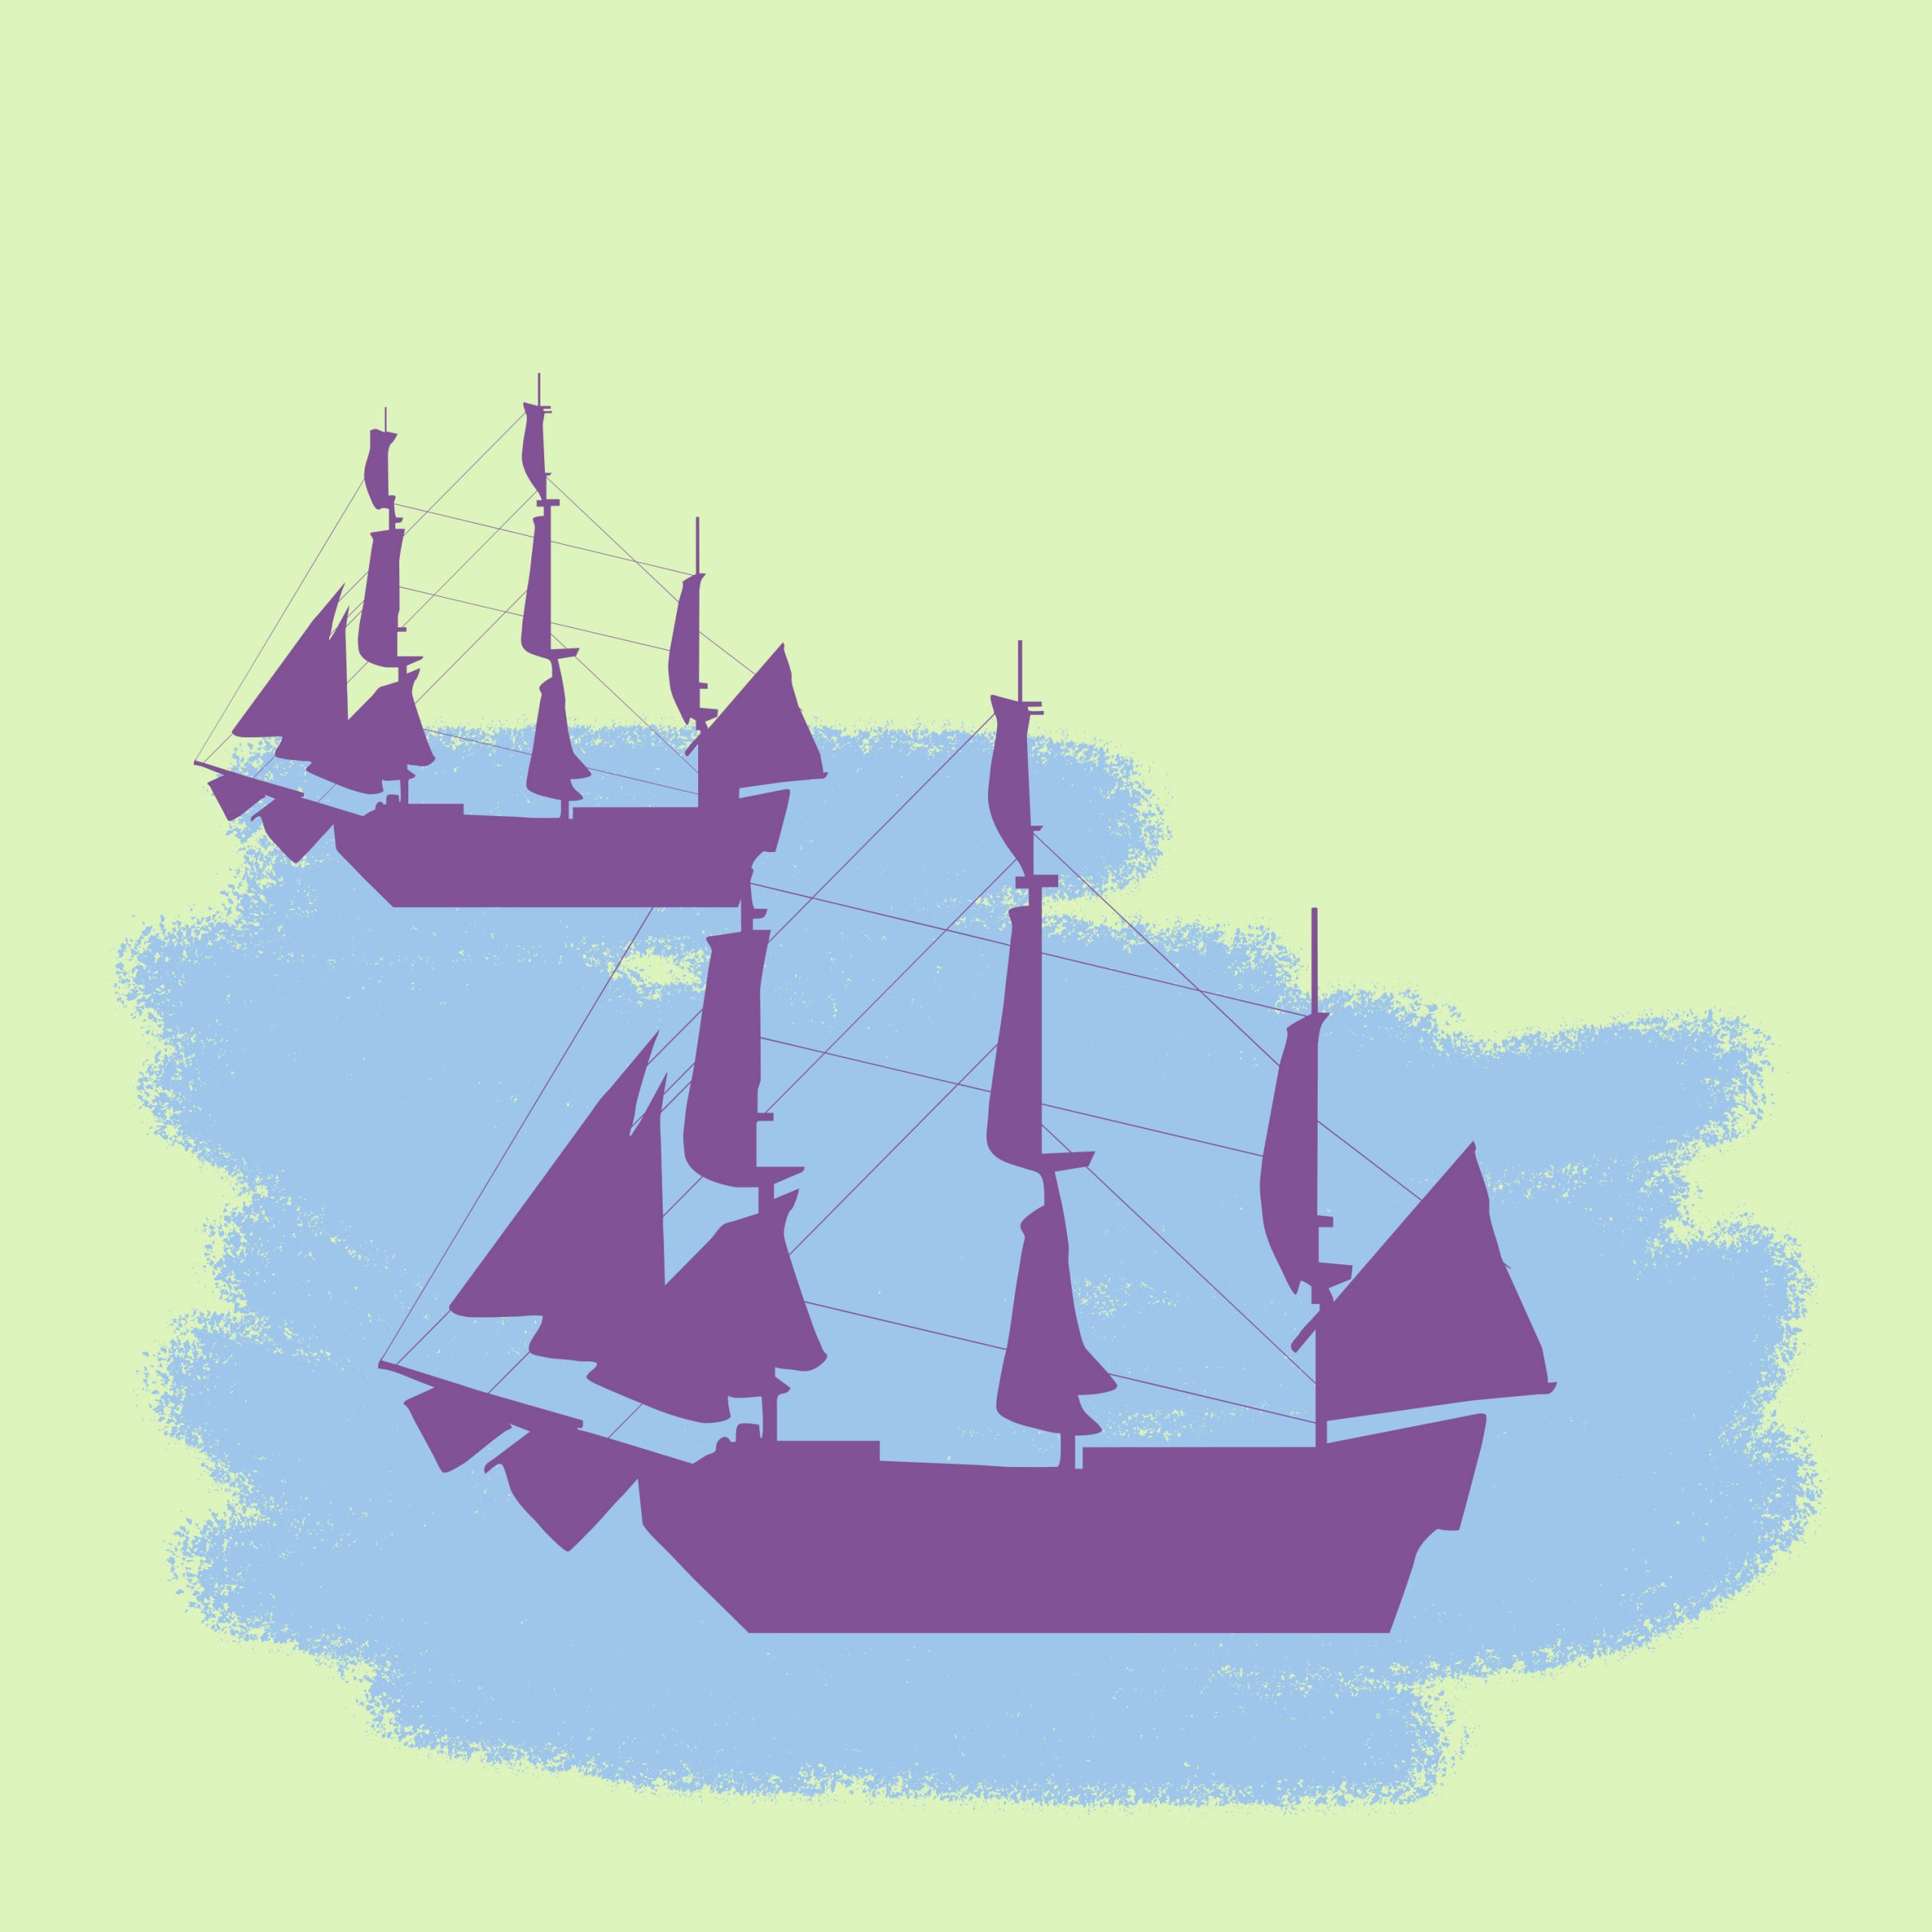 Boats illustration